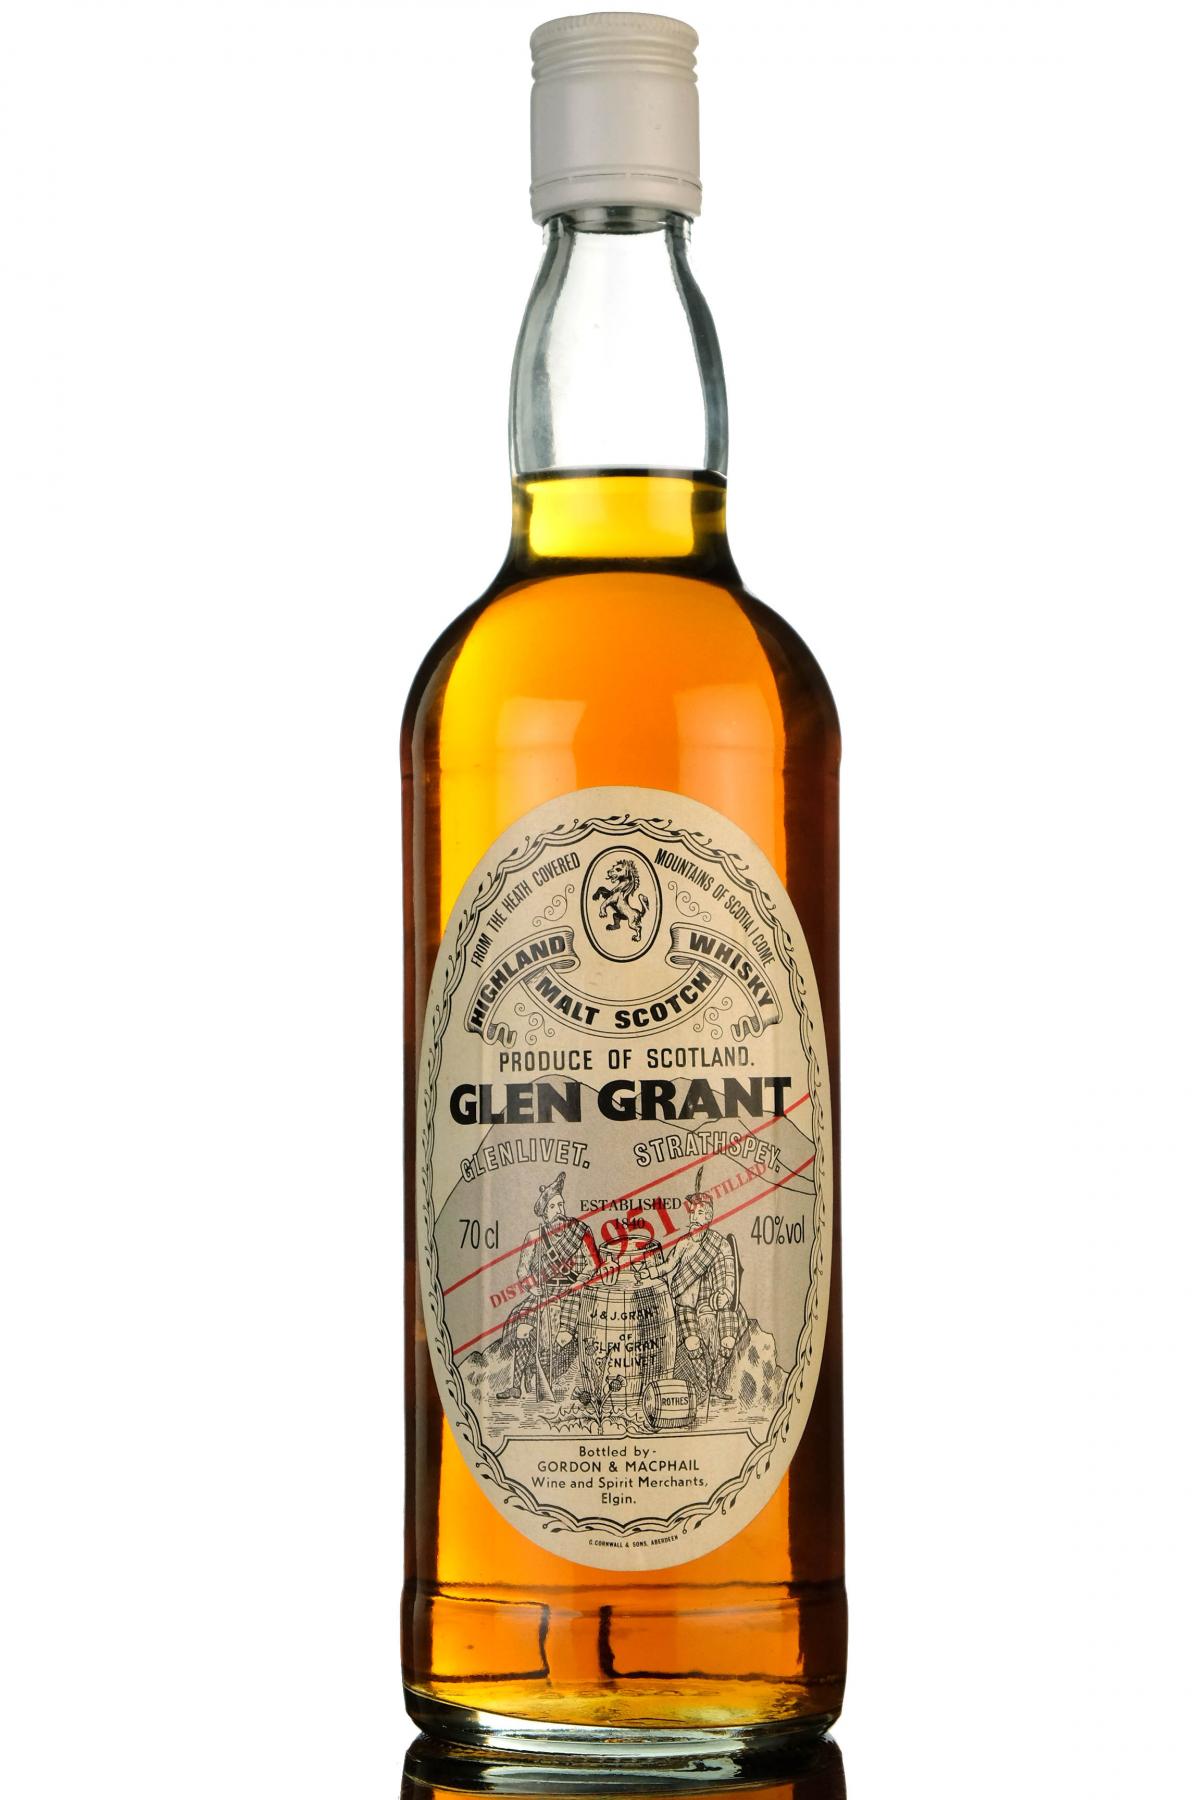 Glen Grant 1951 - Gordon & MacPhail